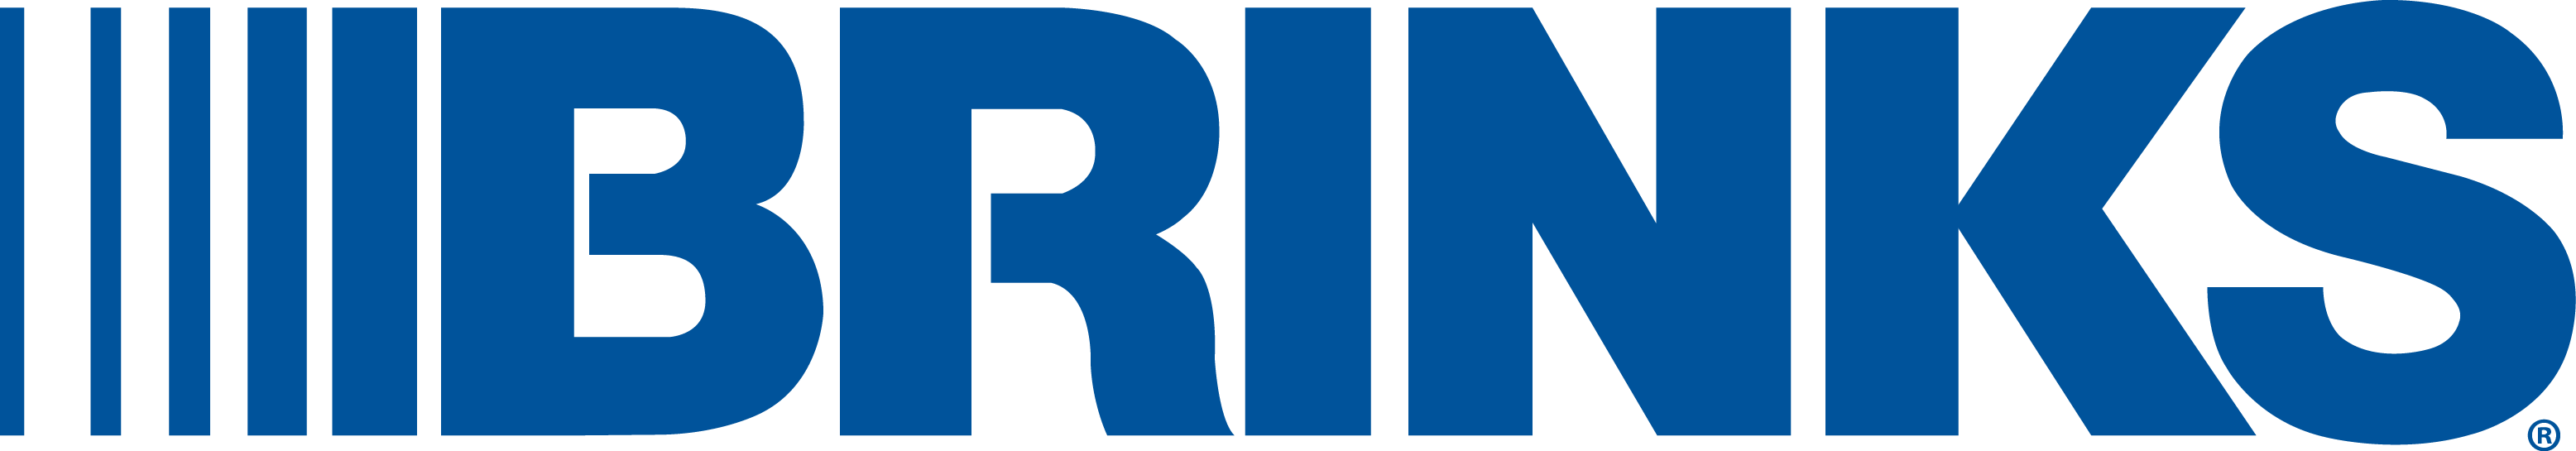 brinks-logo-blue